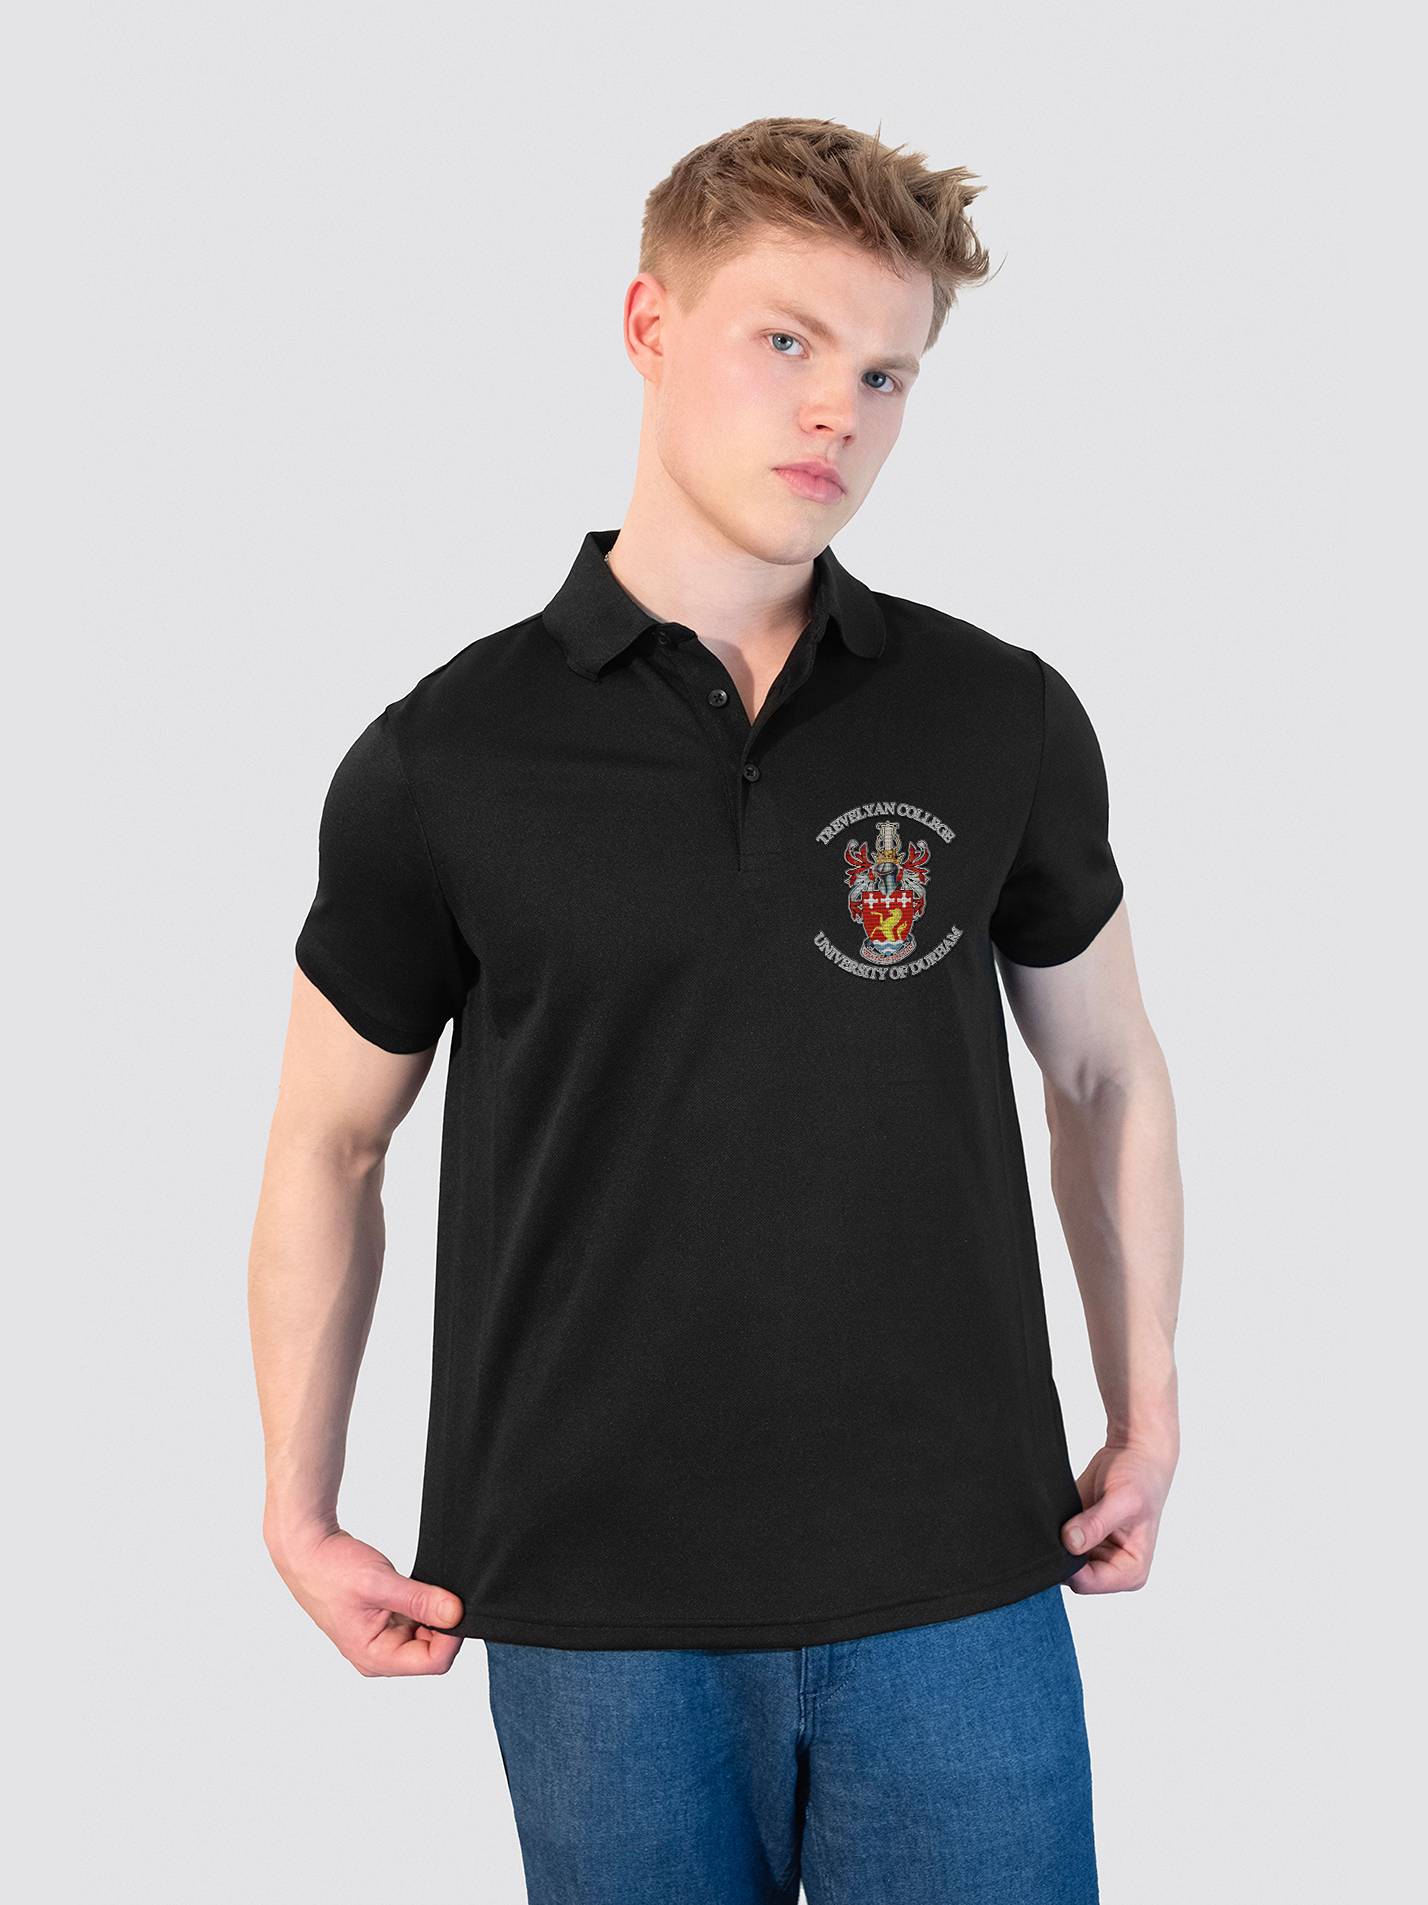 Trevelyan College Durham Sustainable Men's Polo Shirt